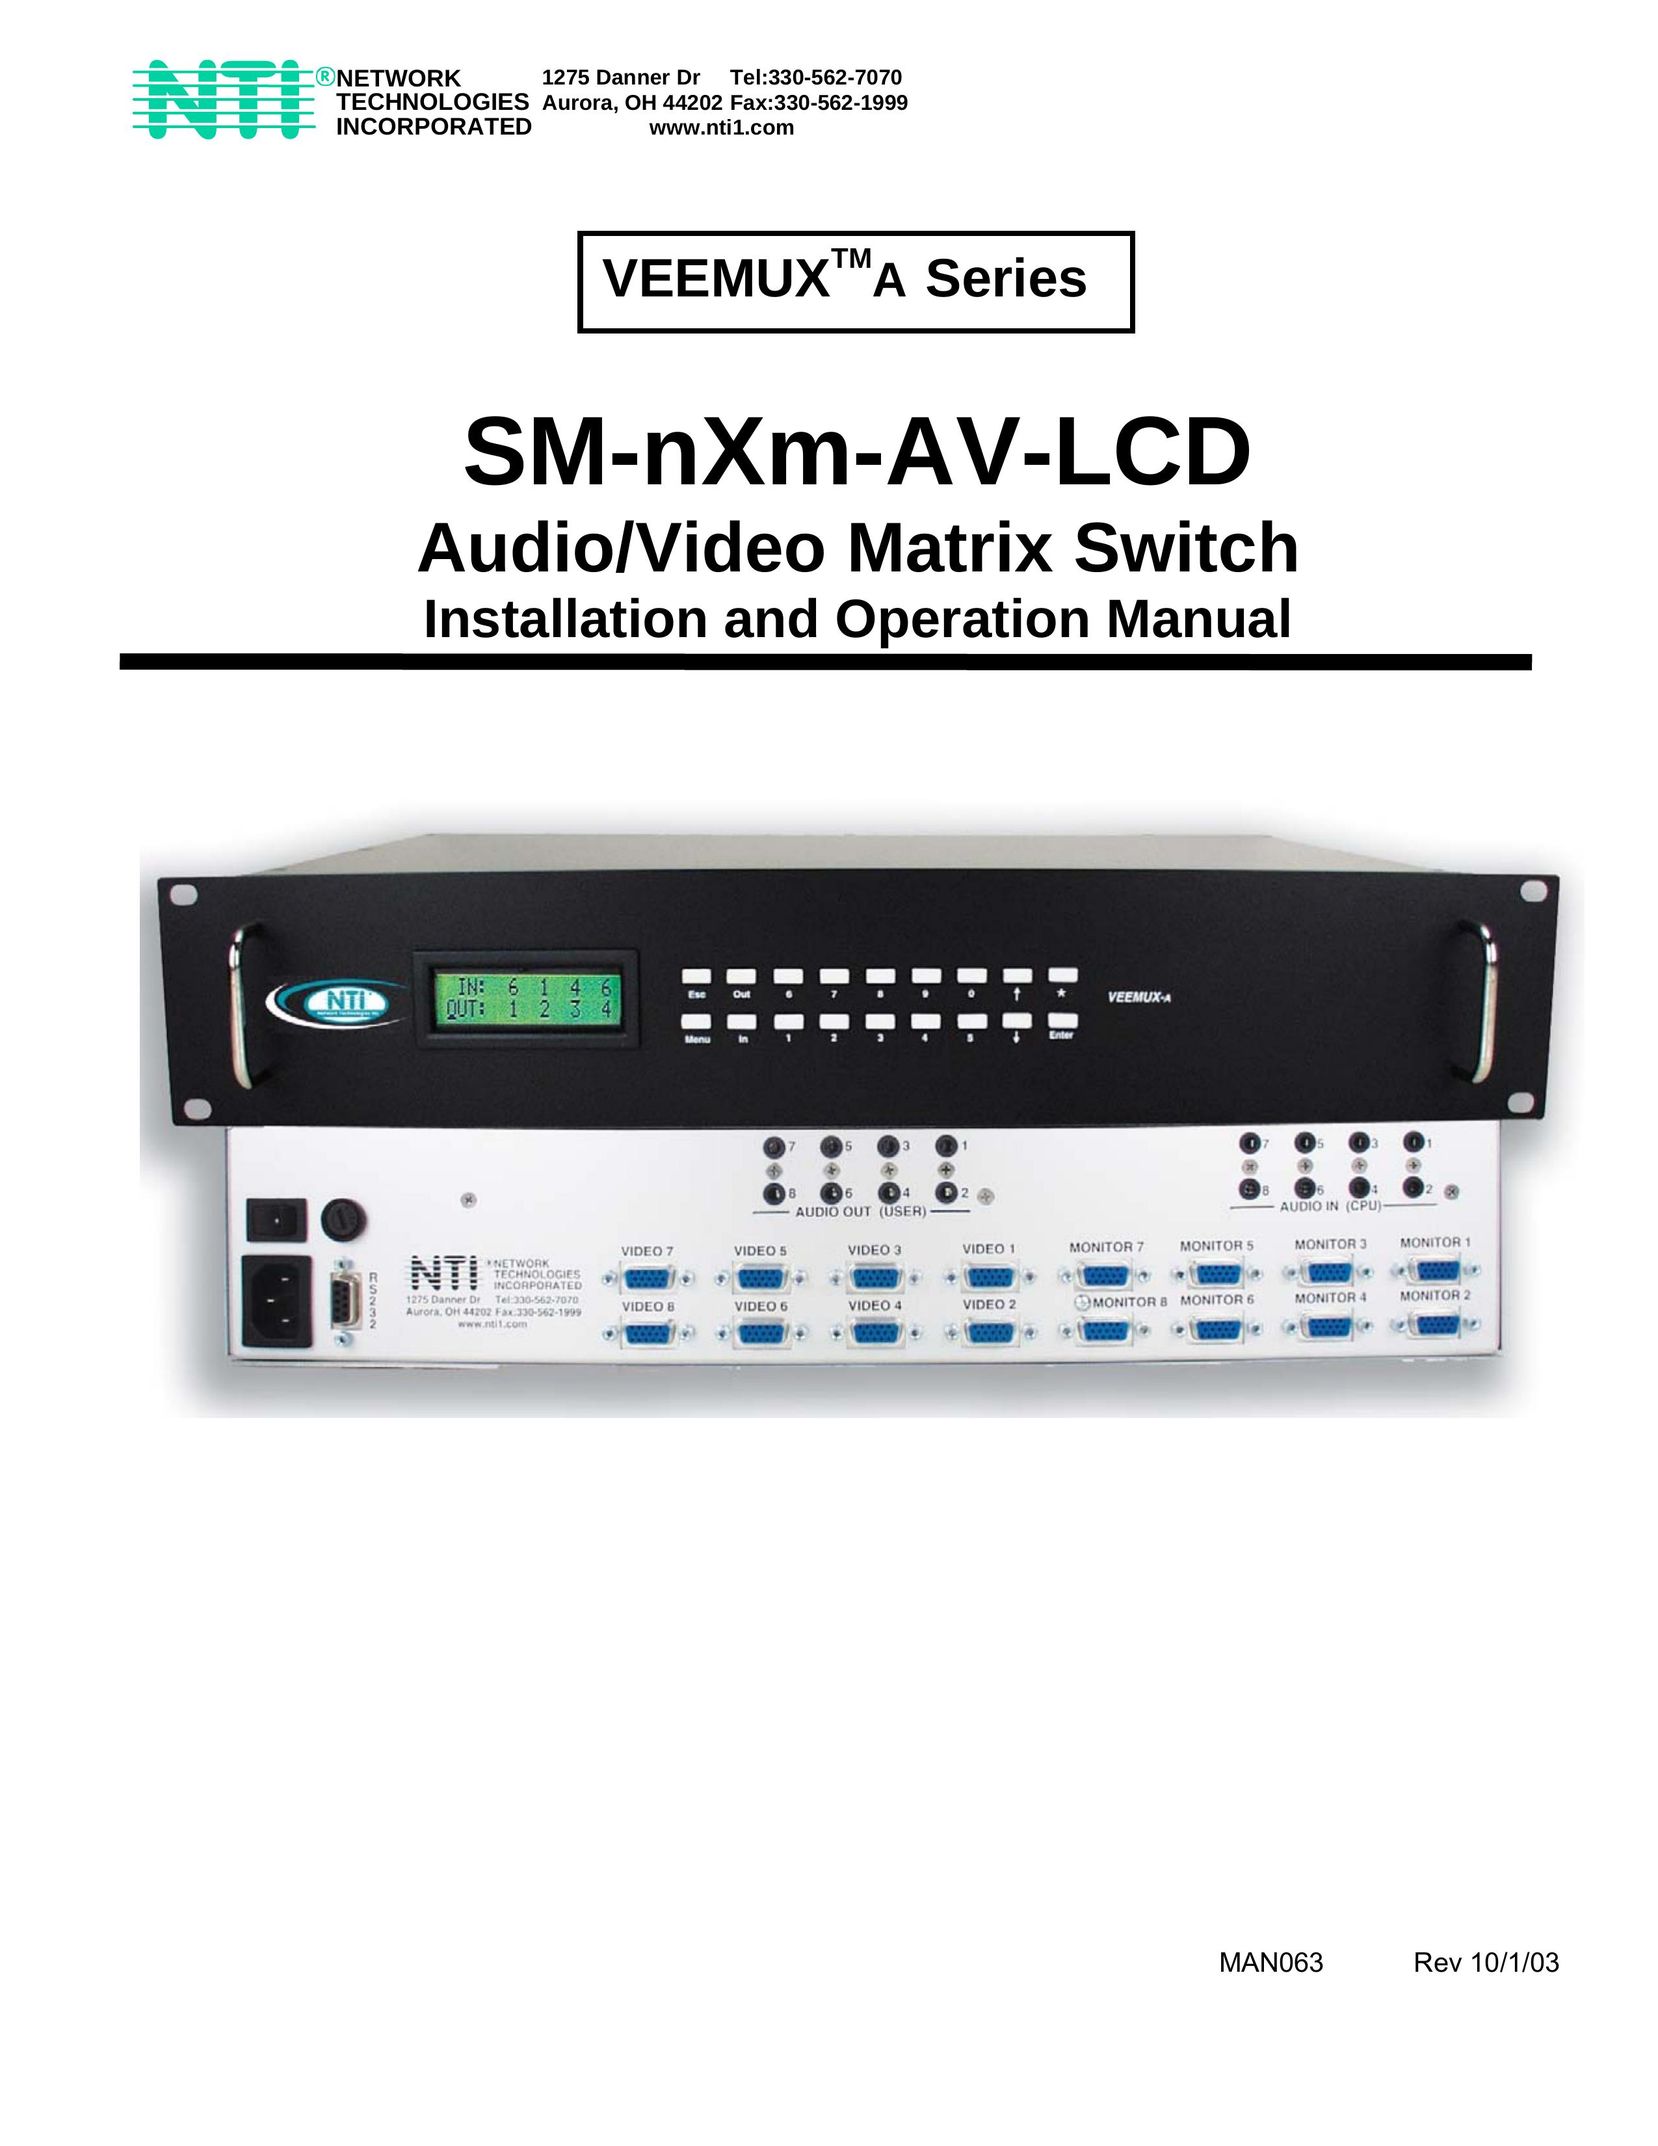 Network Technologies SM-nXm-AV-LCD Switch User Manual